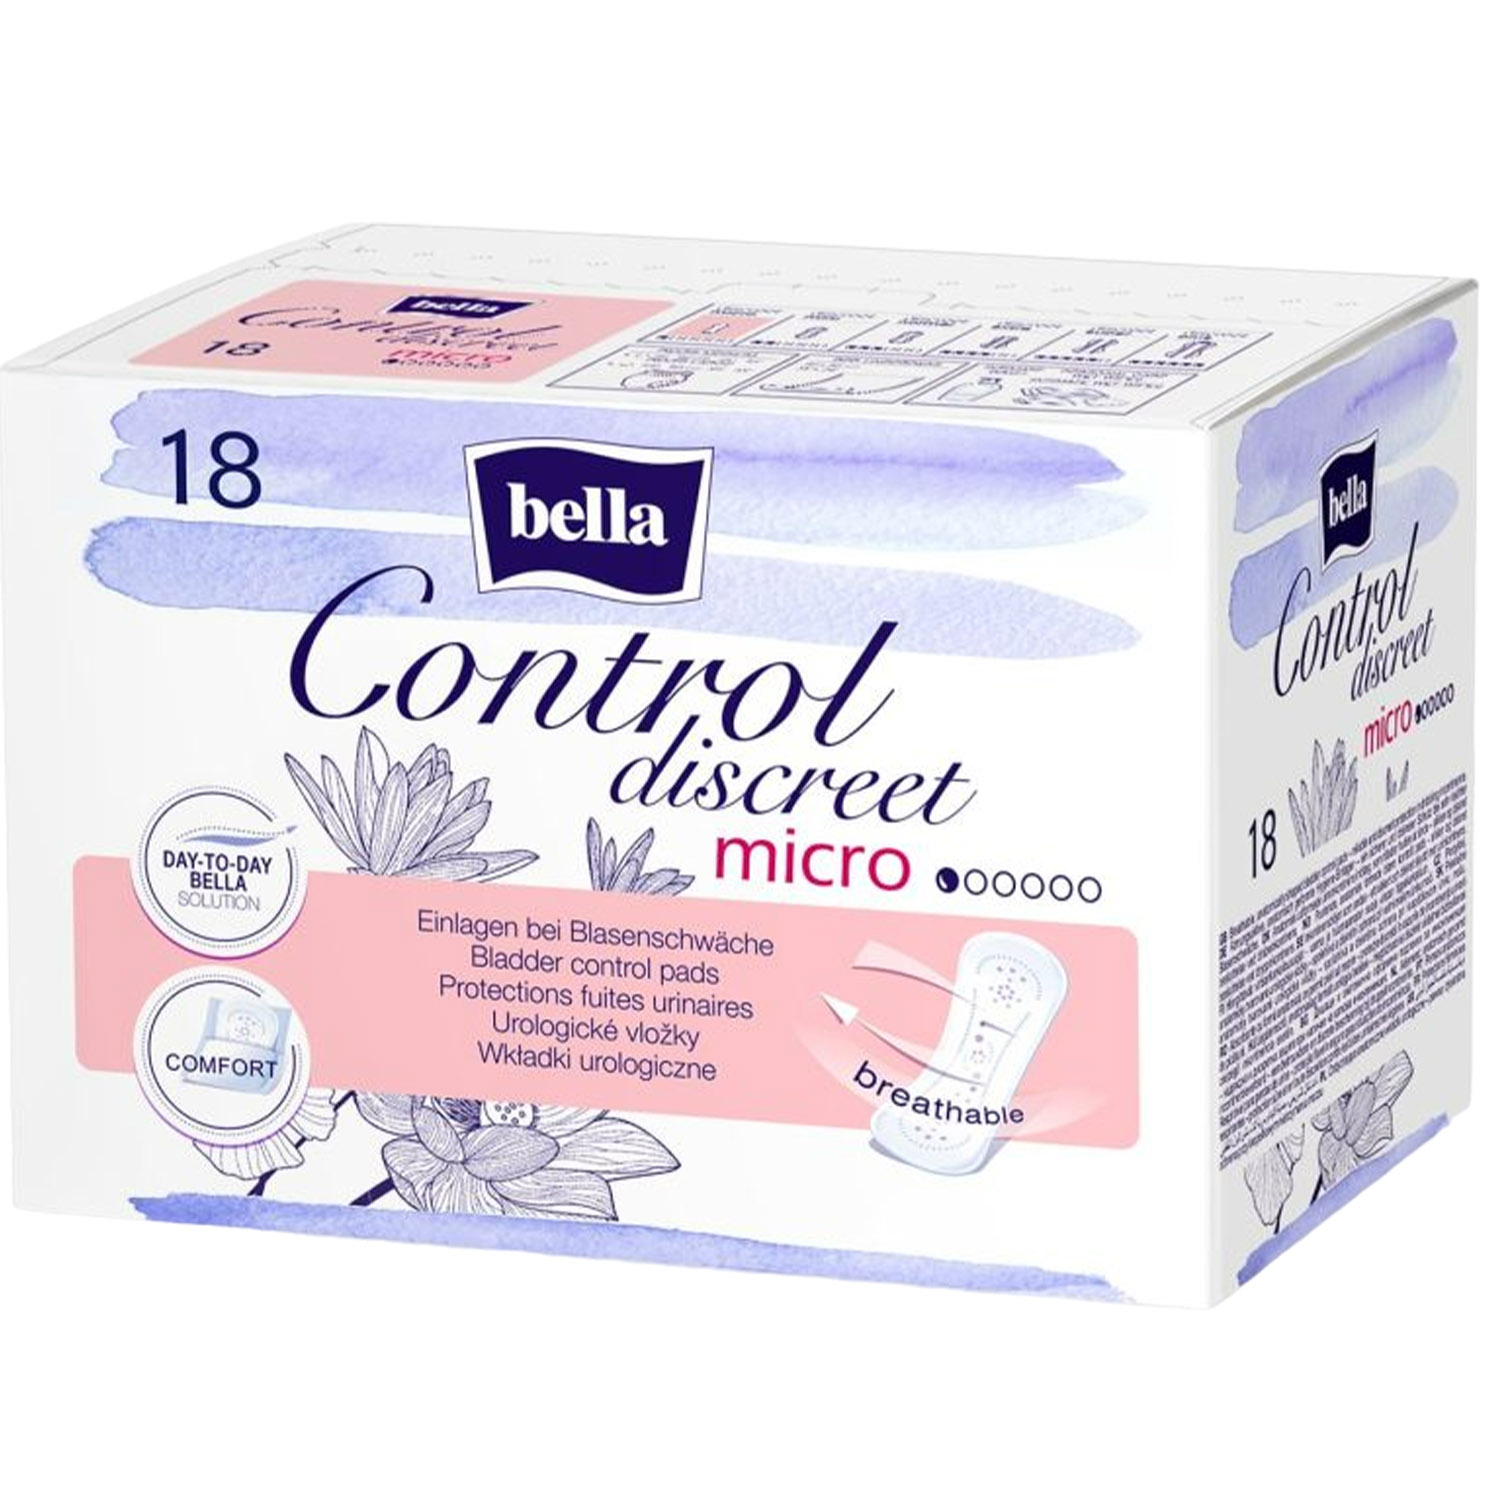 Урологические прокладки Bella Control Discreet Micro 18 шт. - фото 1